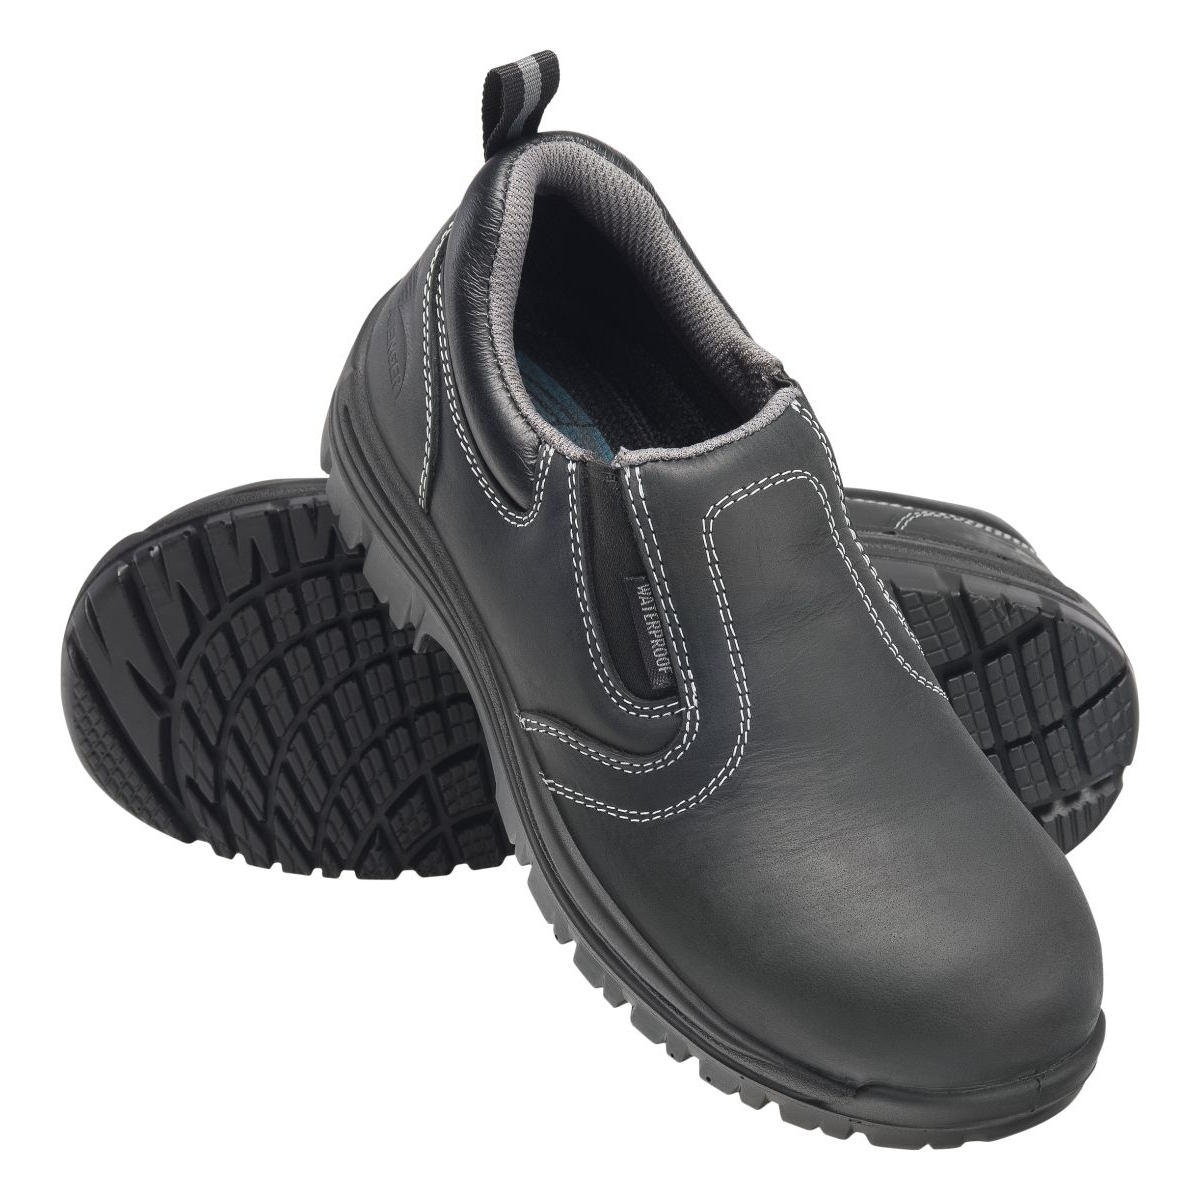 FSI FOOTWEAR SPECIALTIES INTERNATIONAL NAUTILUS Avenger Women's Foreman Slip-On Composite Toe PR Work Shoes Black - A7169 - BLACK, 8-M